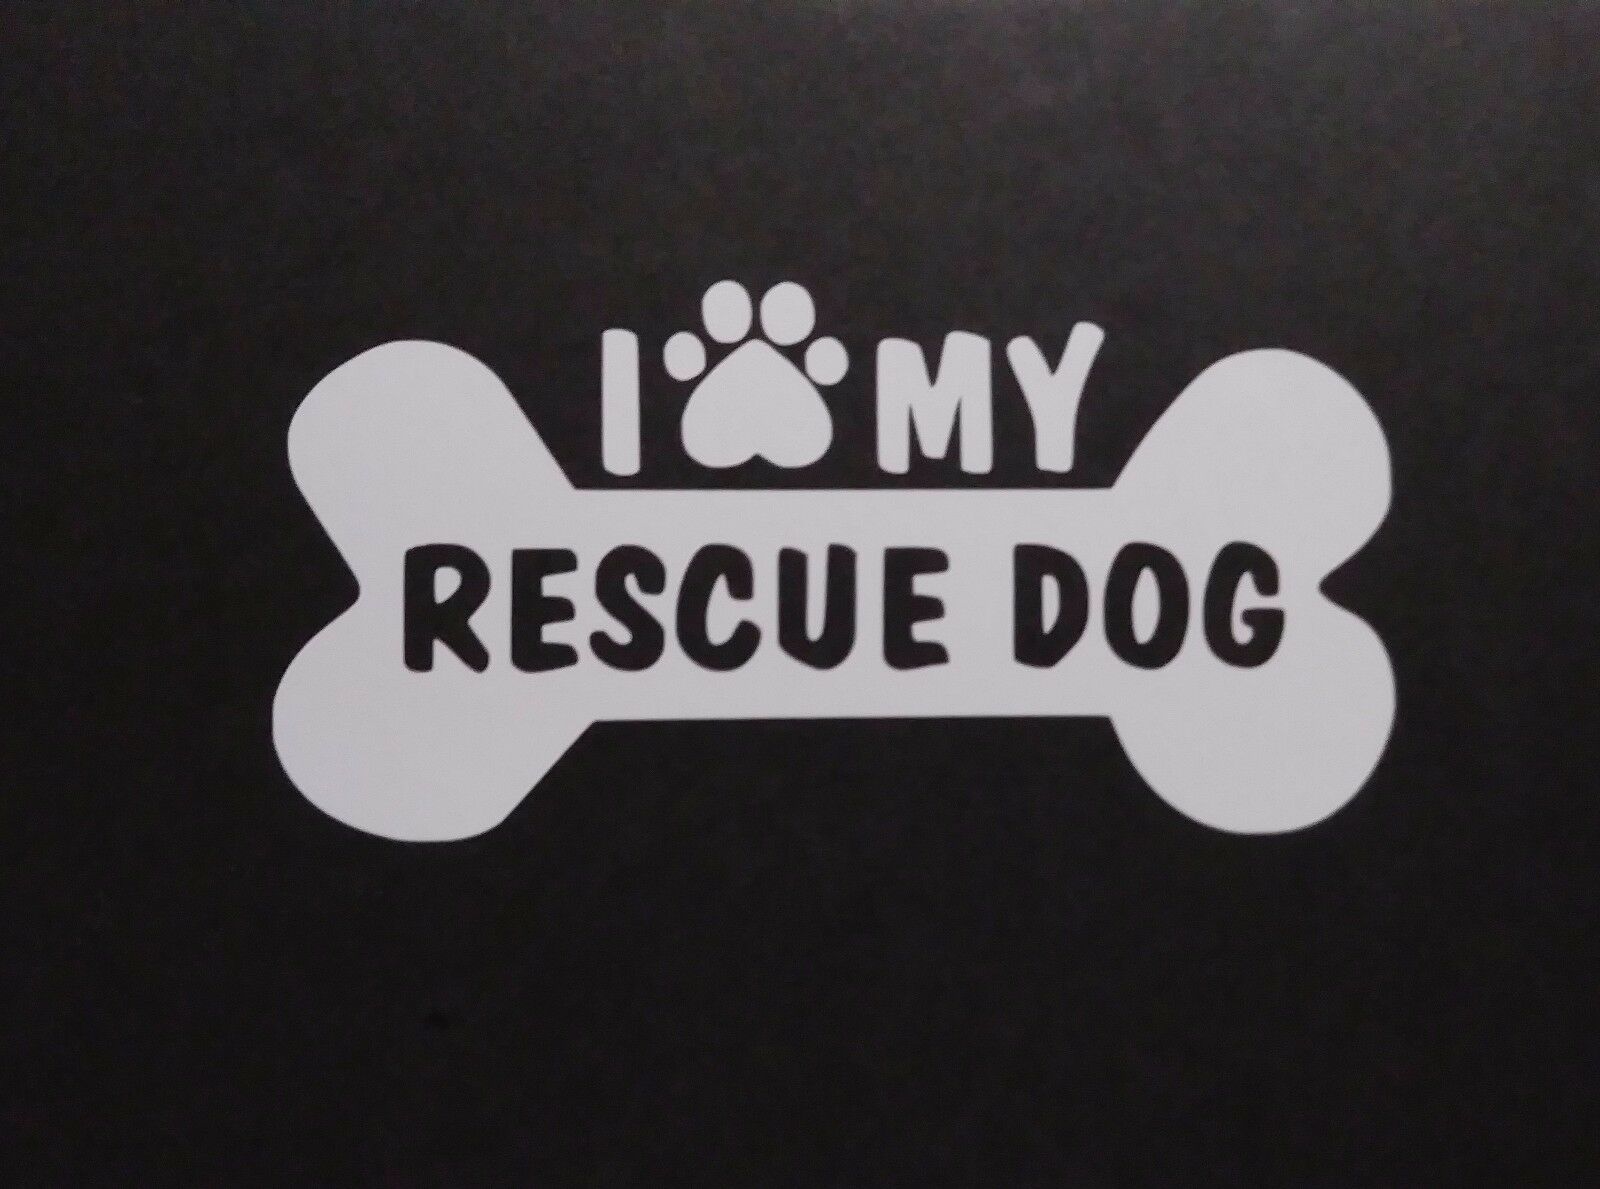  I Love My Rescue Dog Vinyl Decal